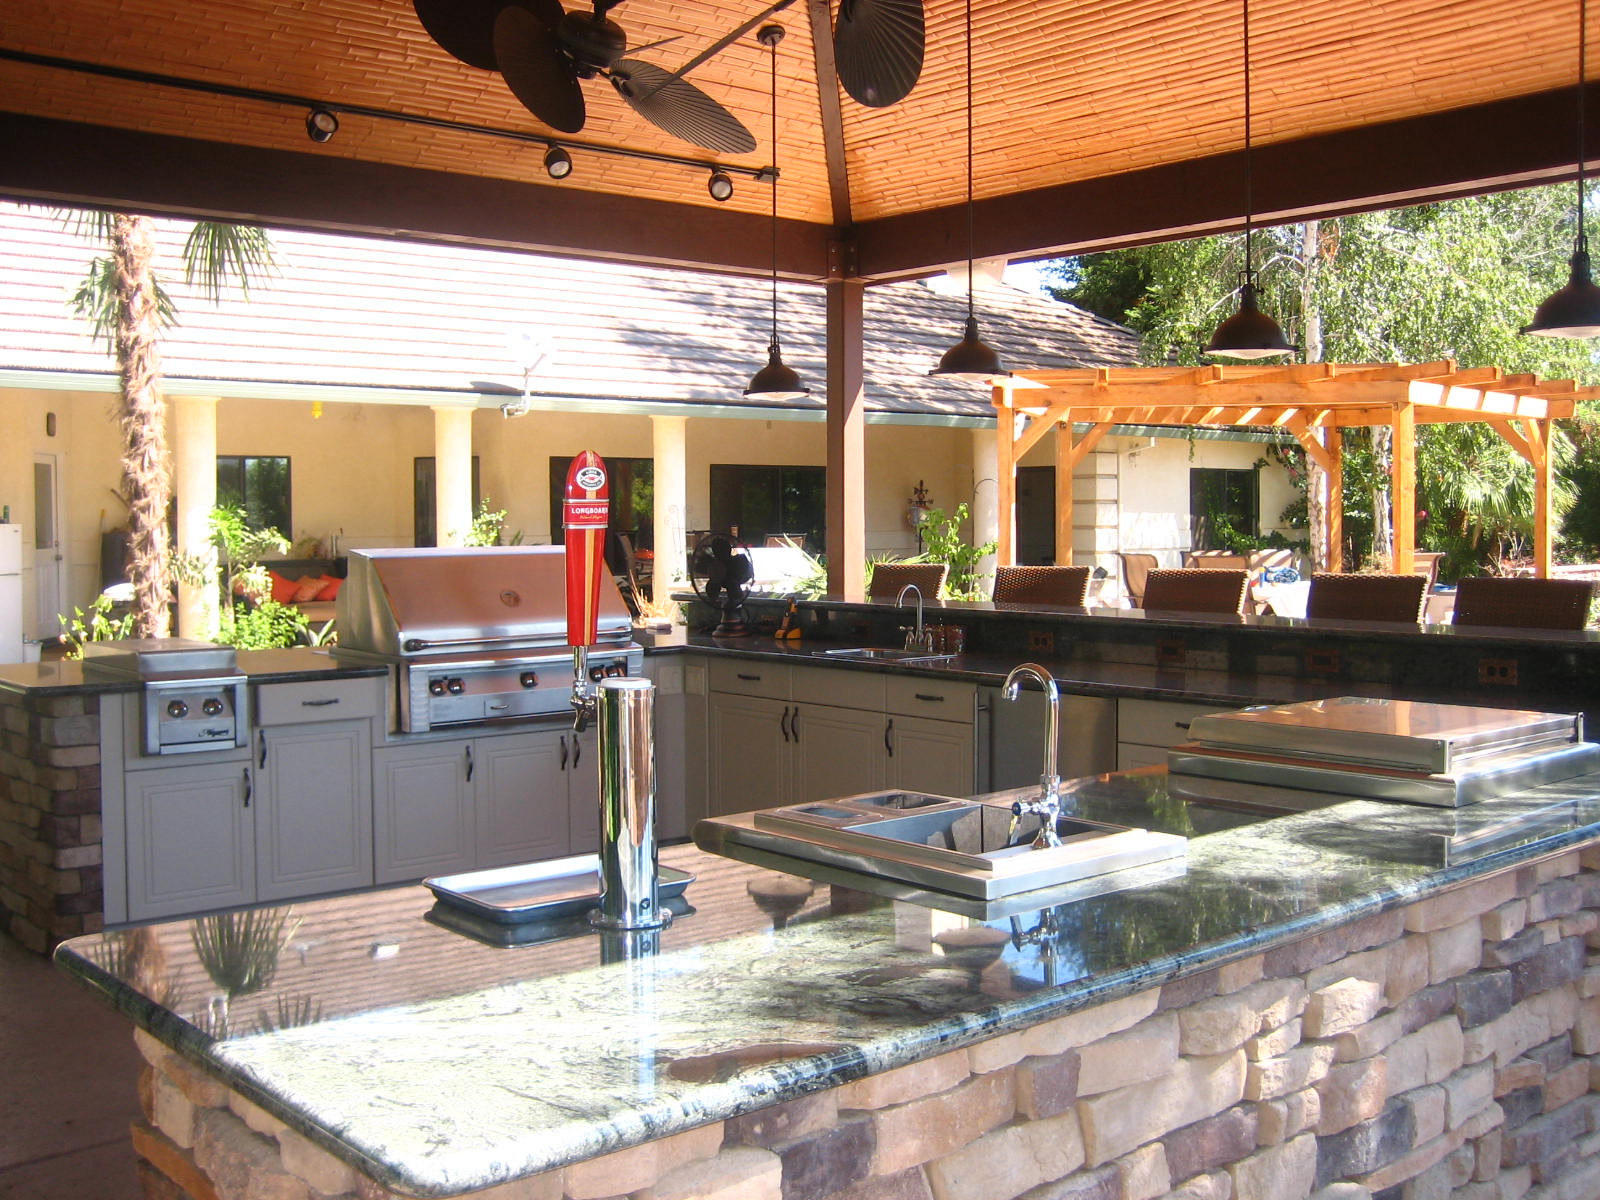 Outdoor Kitchen Designs Plans
 3 Design Ideas for an Outdoor Kitchen Lanai Outdoor Kitchens